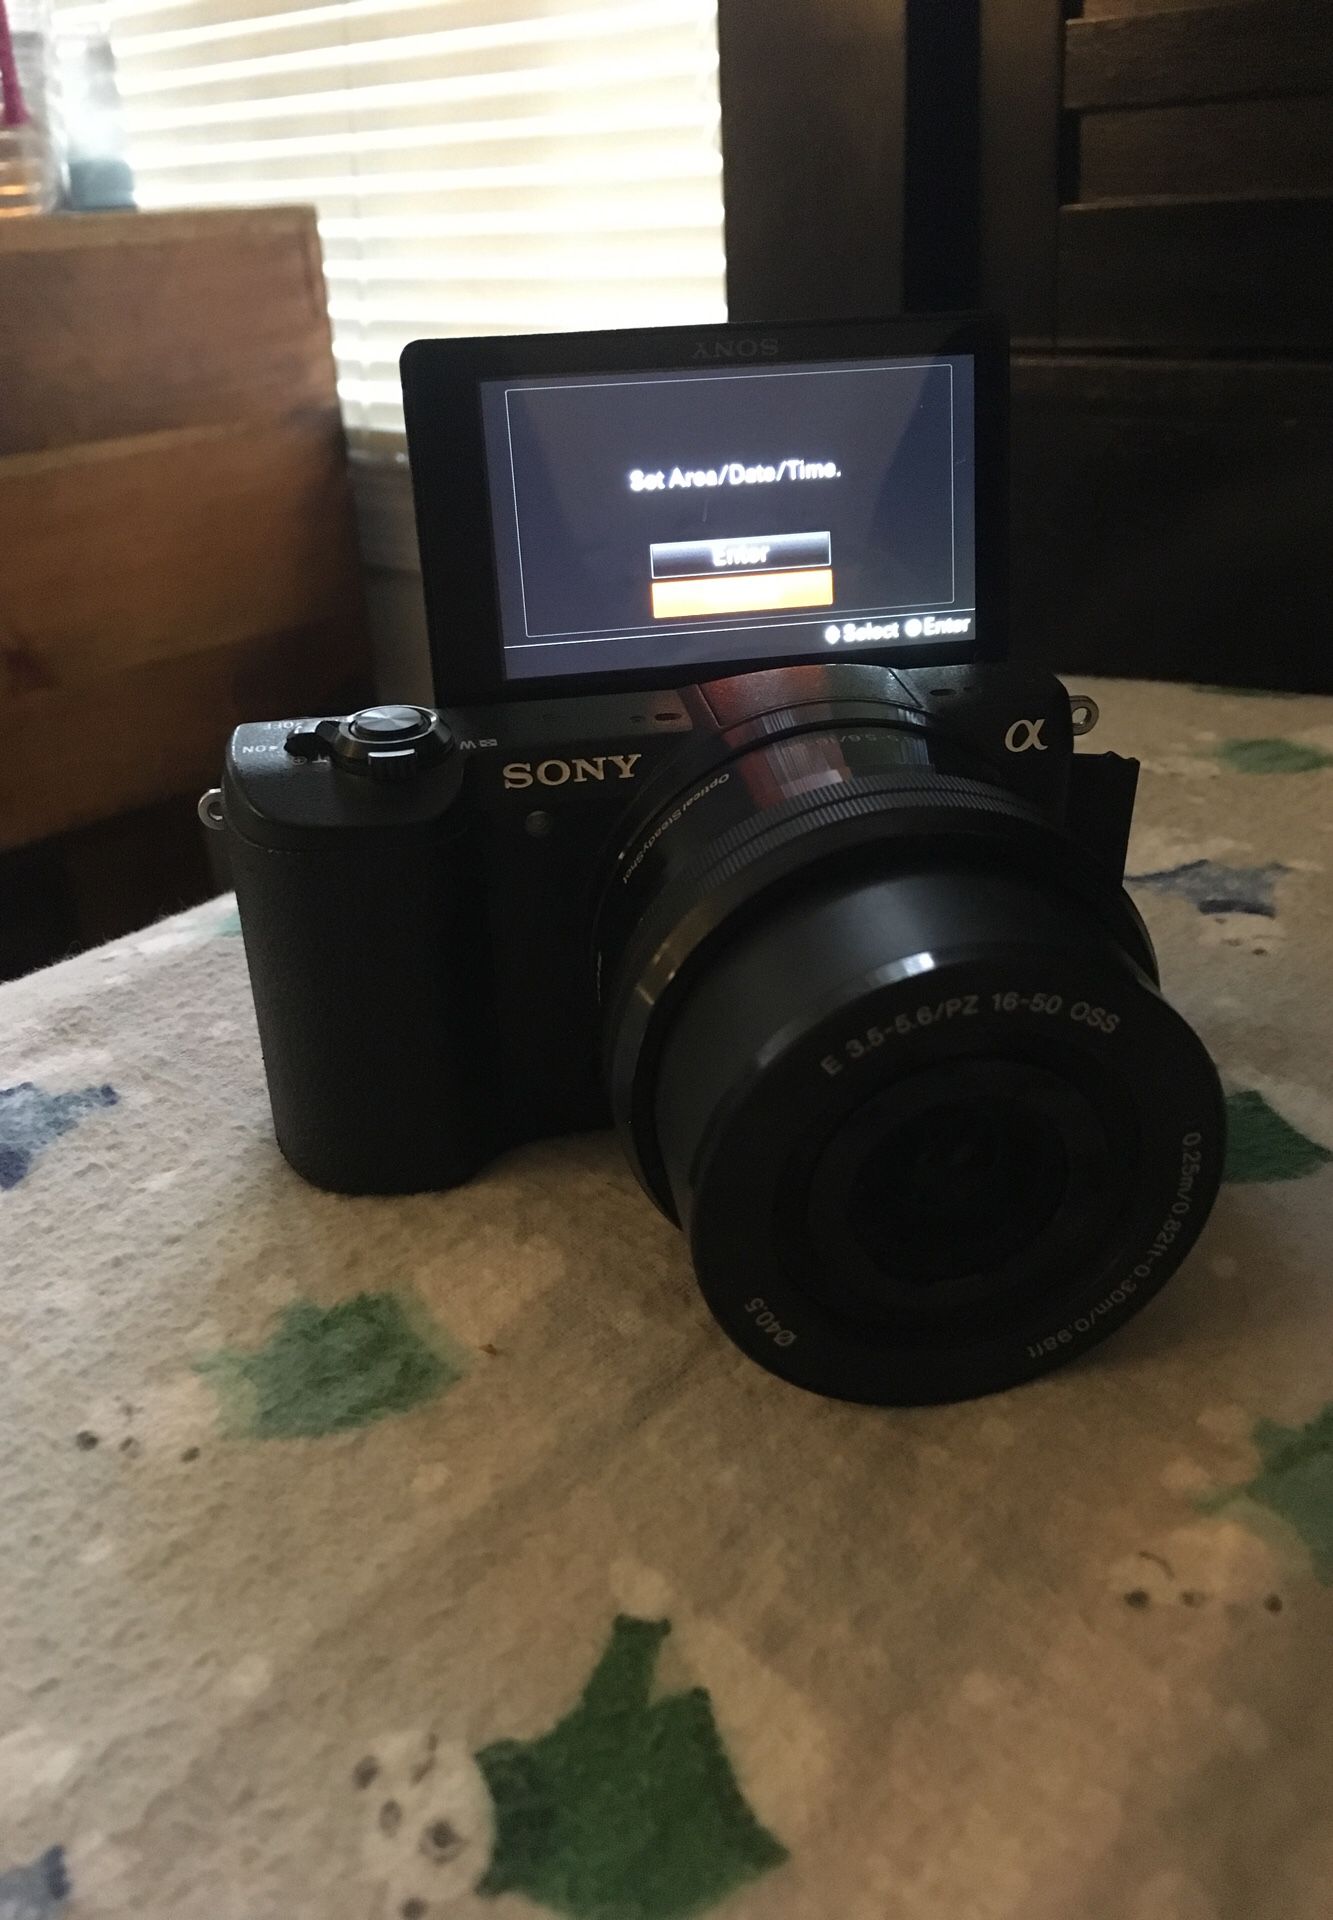 Sony a5100 mirrorless camera